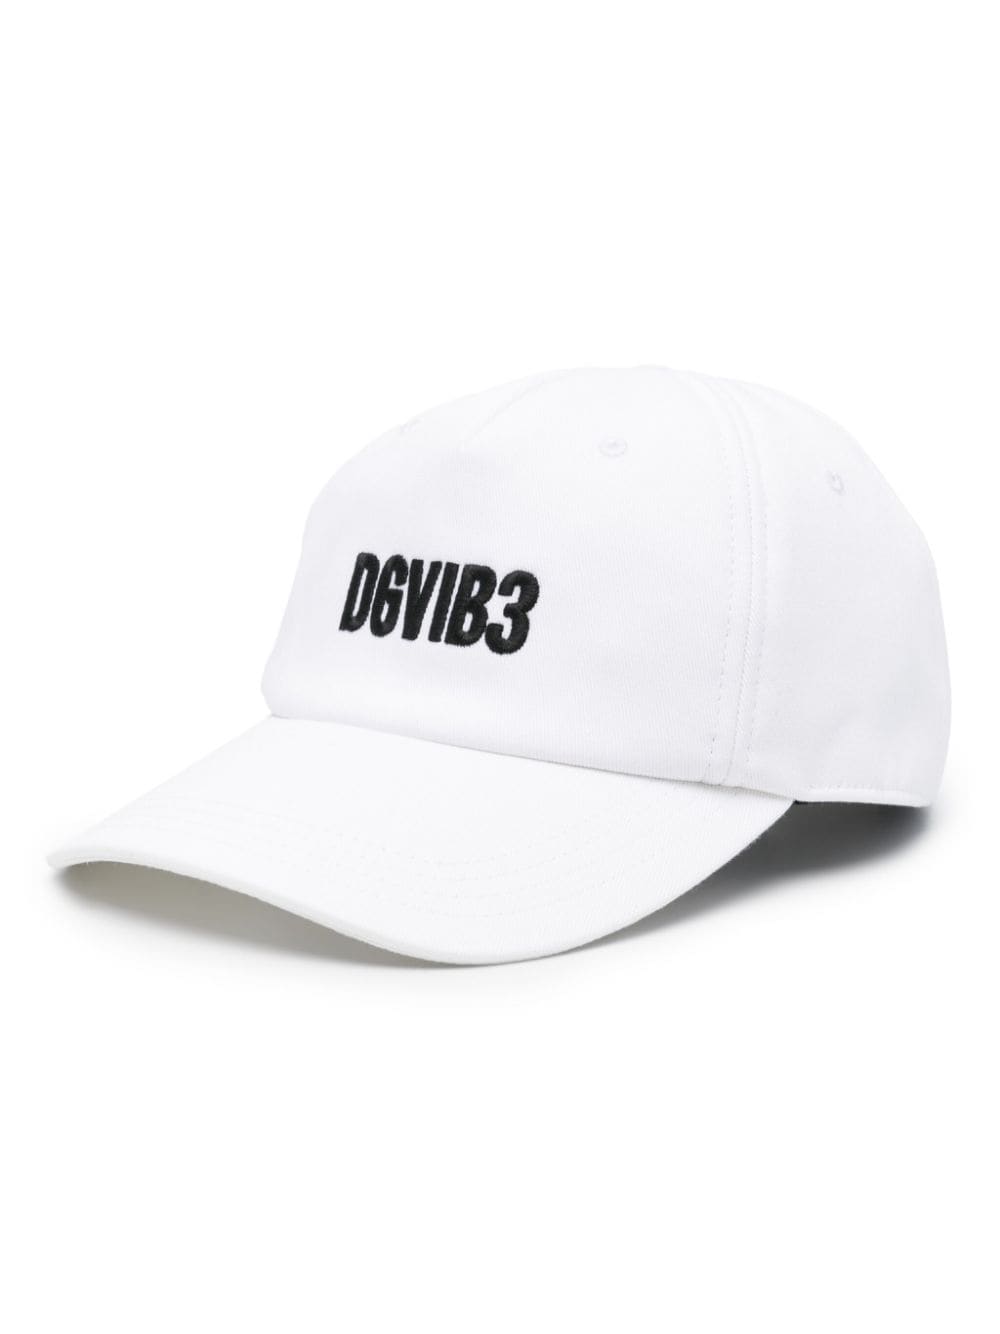 Cappello da baseball con ricamo DGVIB3